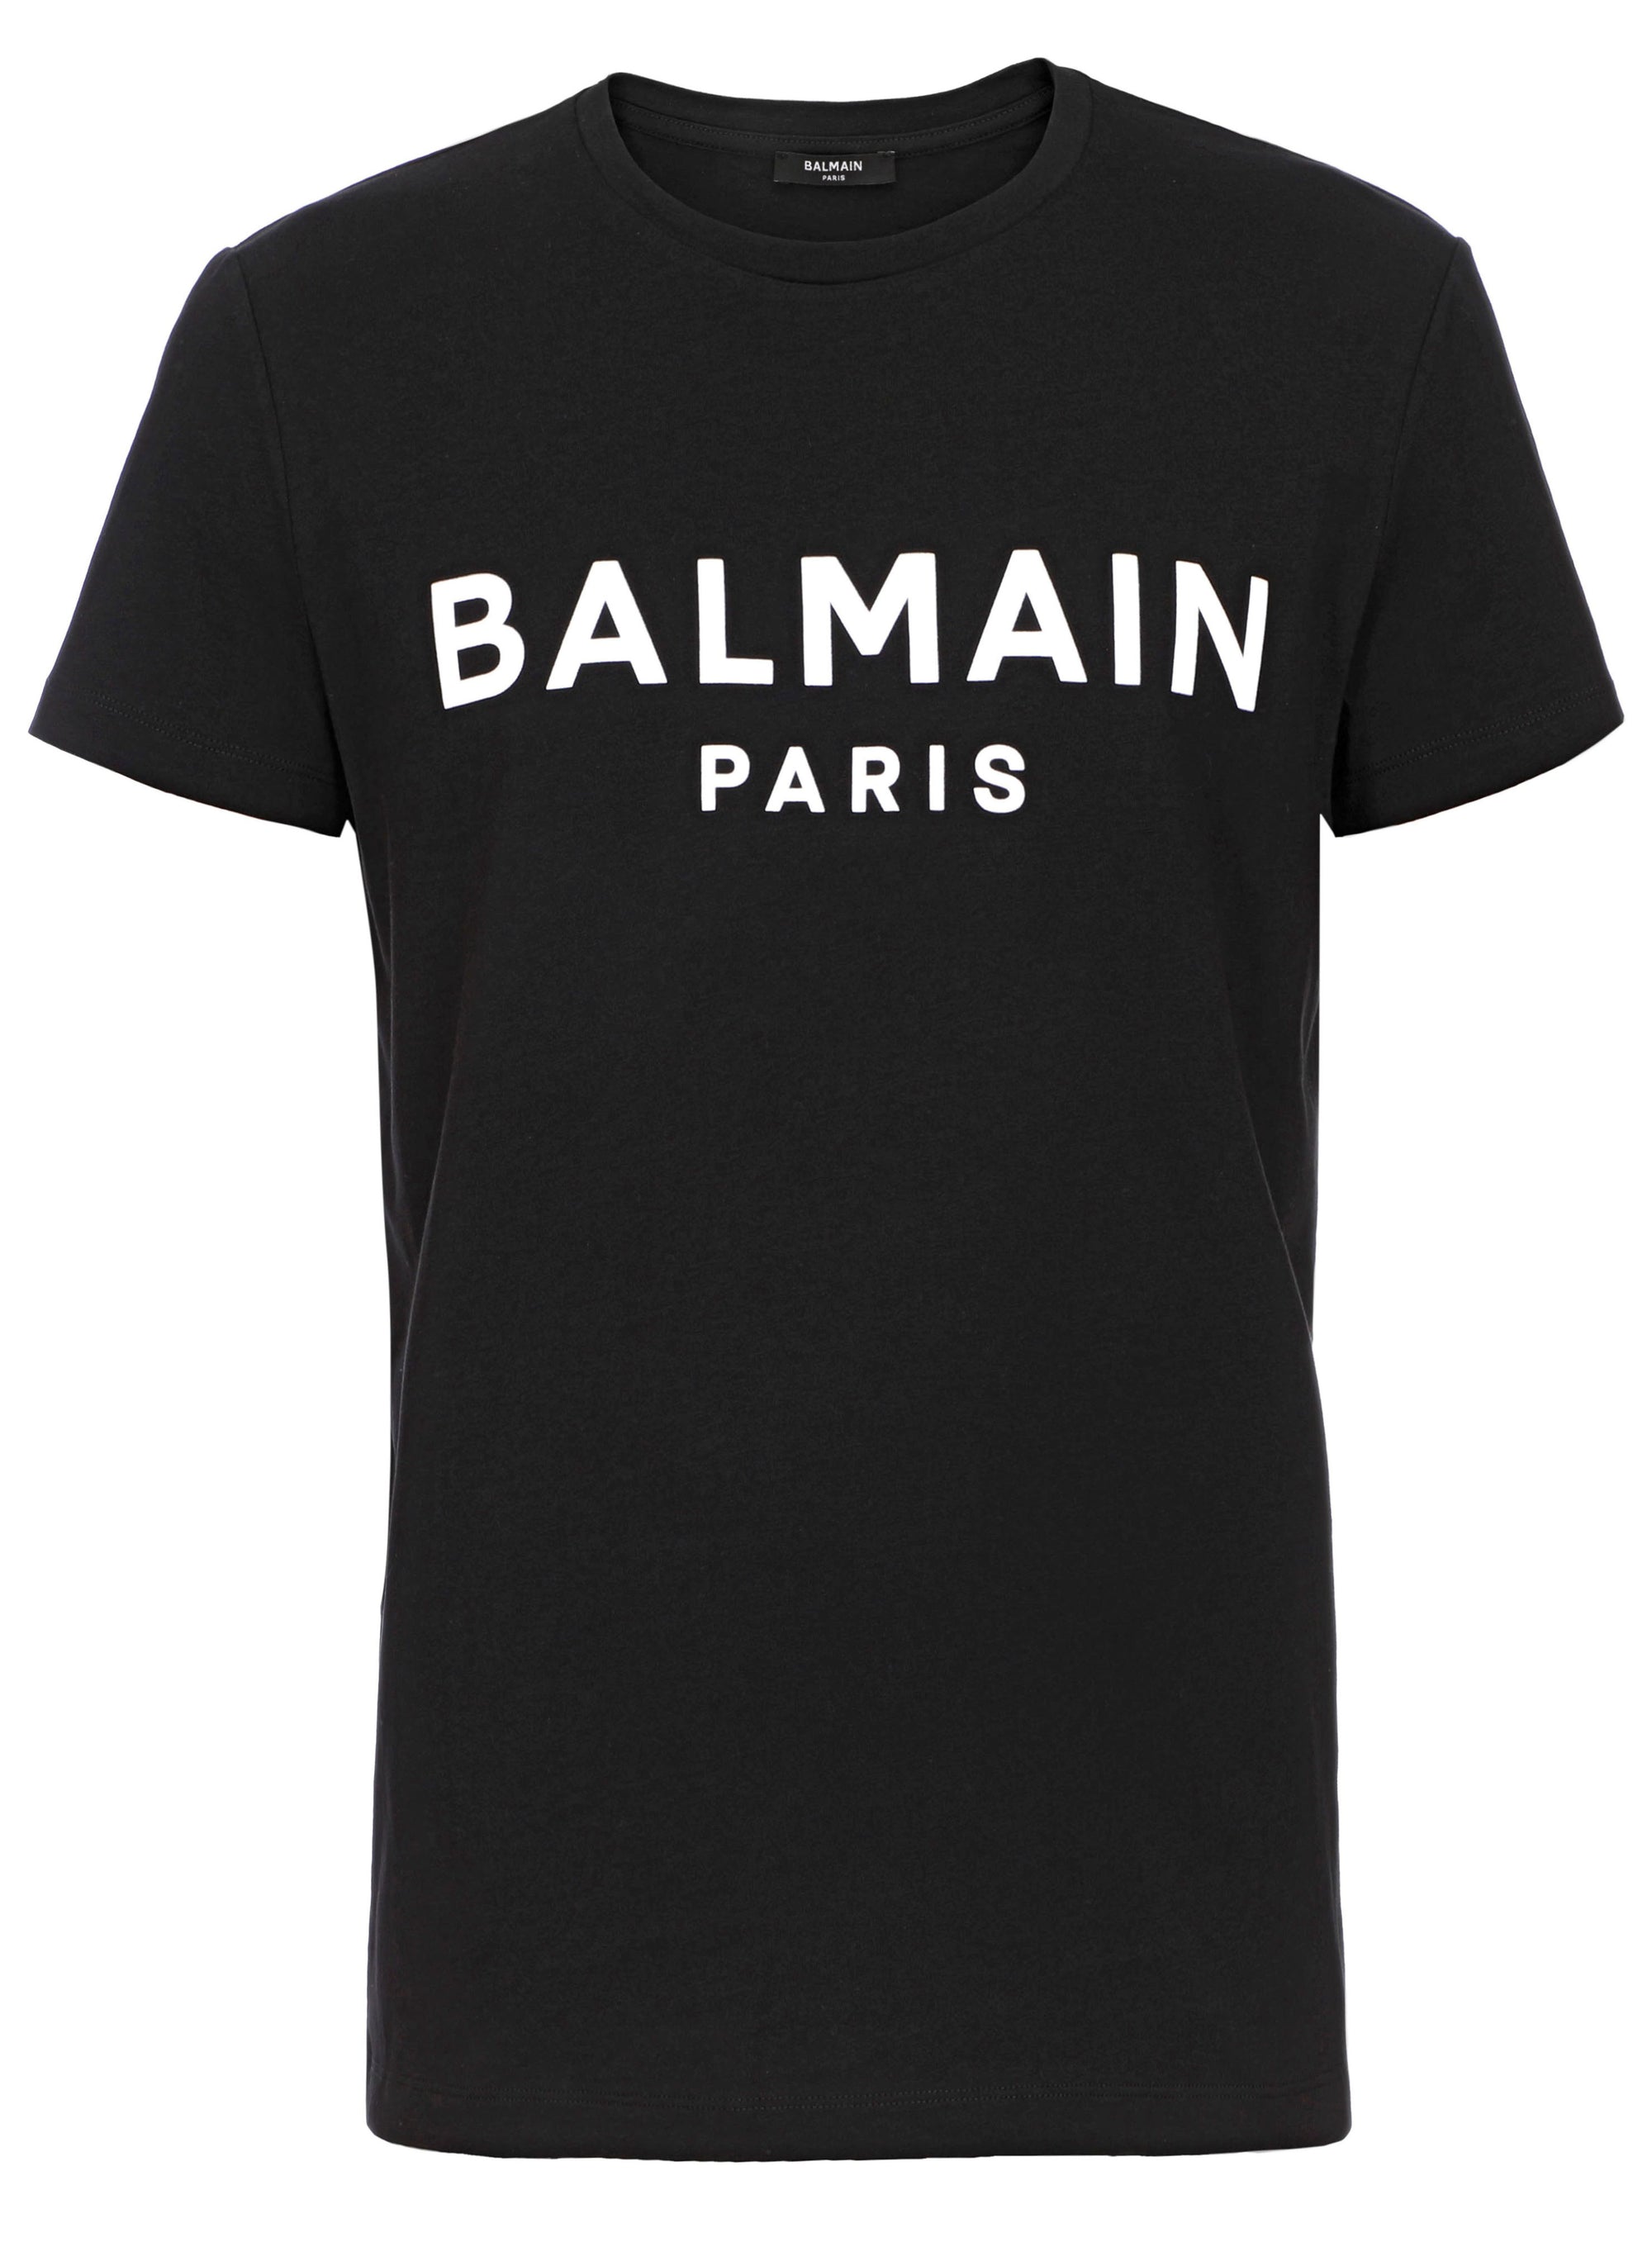 BALMAIN PRINTED T-SHIRT STRAIGHT FIT - BLACK